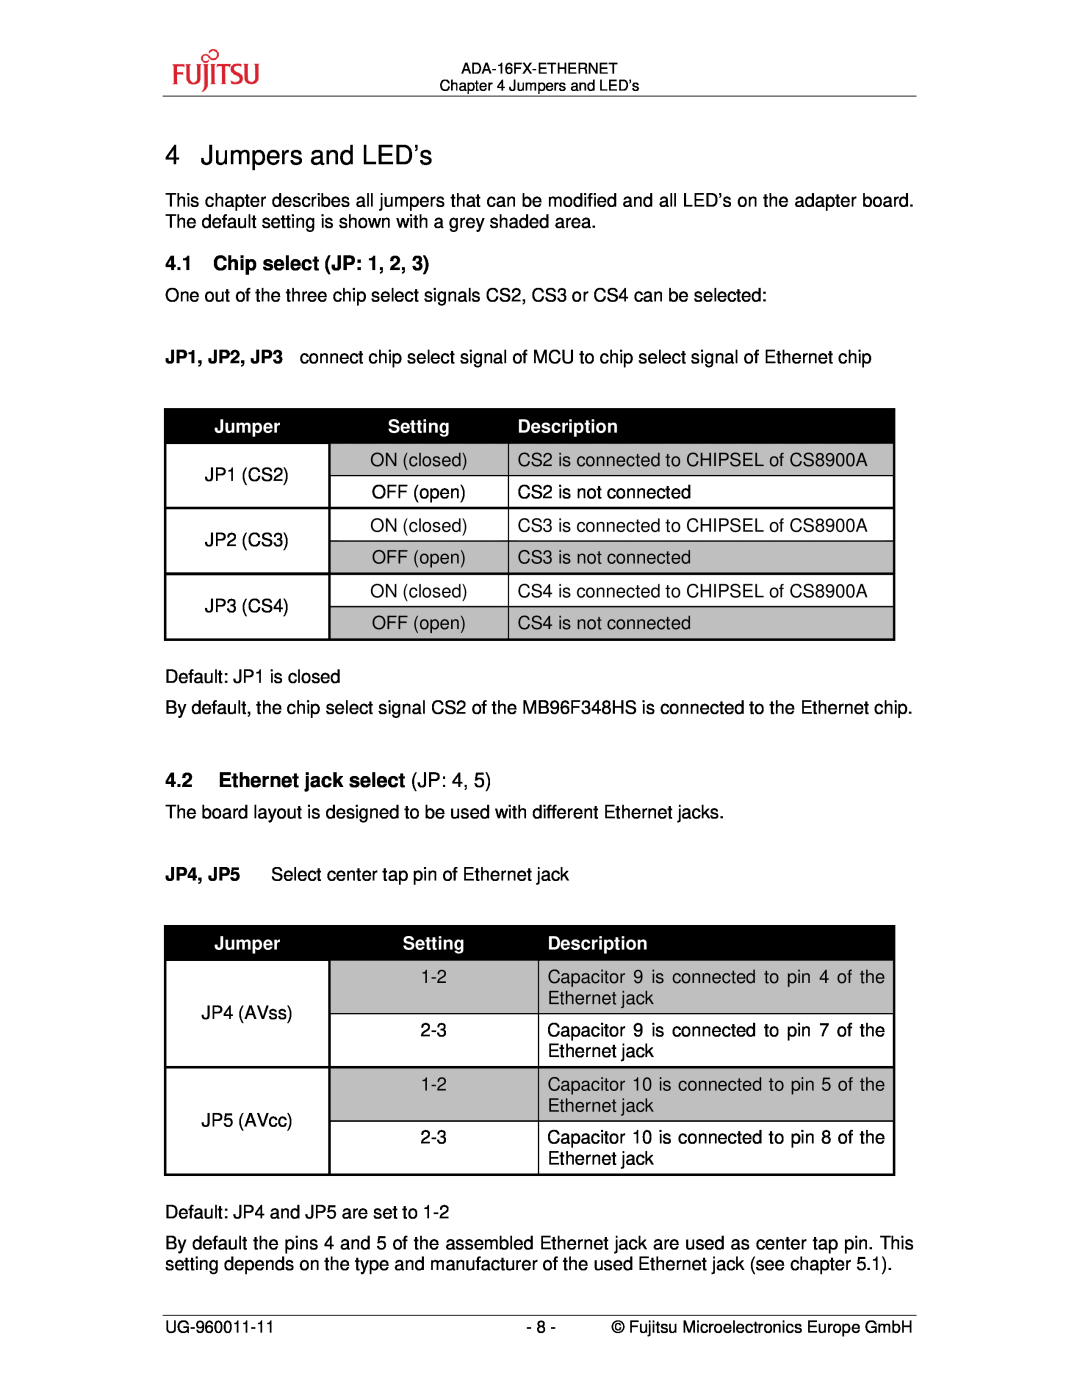 Fujitsu ADA-16FX manual Jumpers and LED’s, Chip select JP, Ethernet jack select JP, Setting, Description 